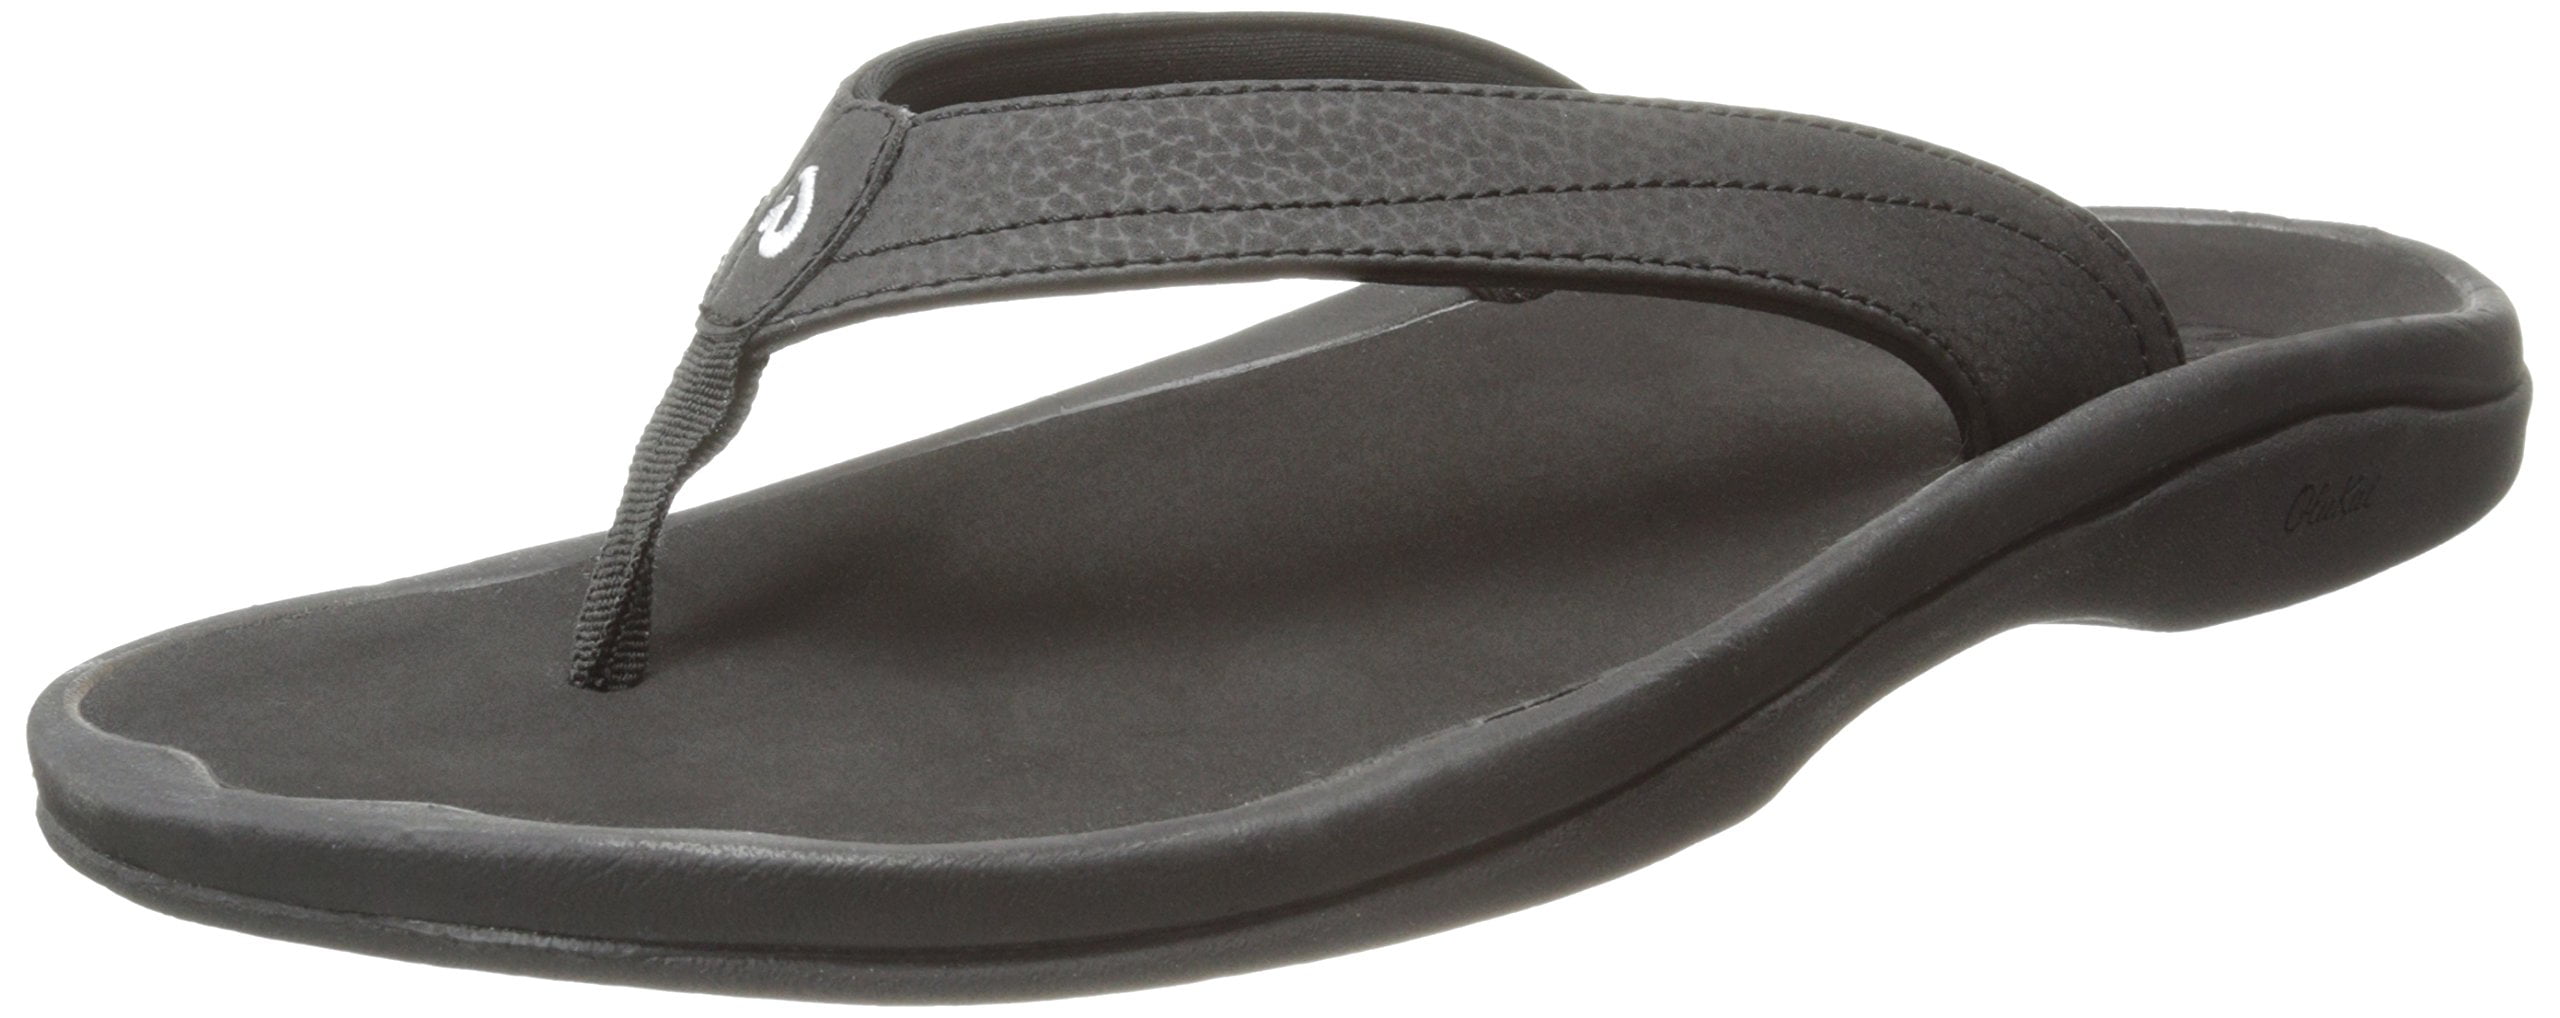 walmart black sandals